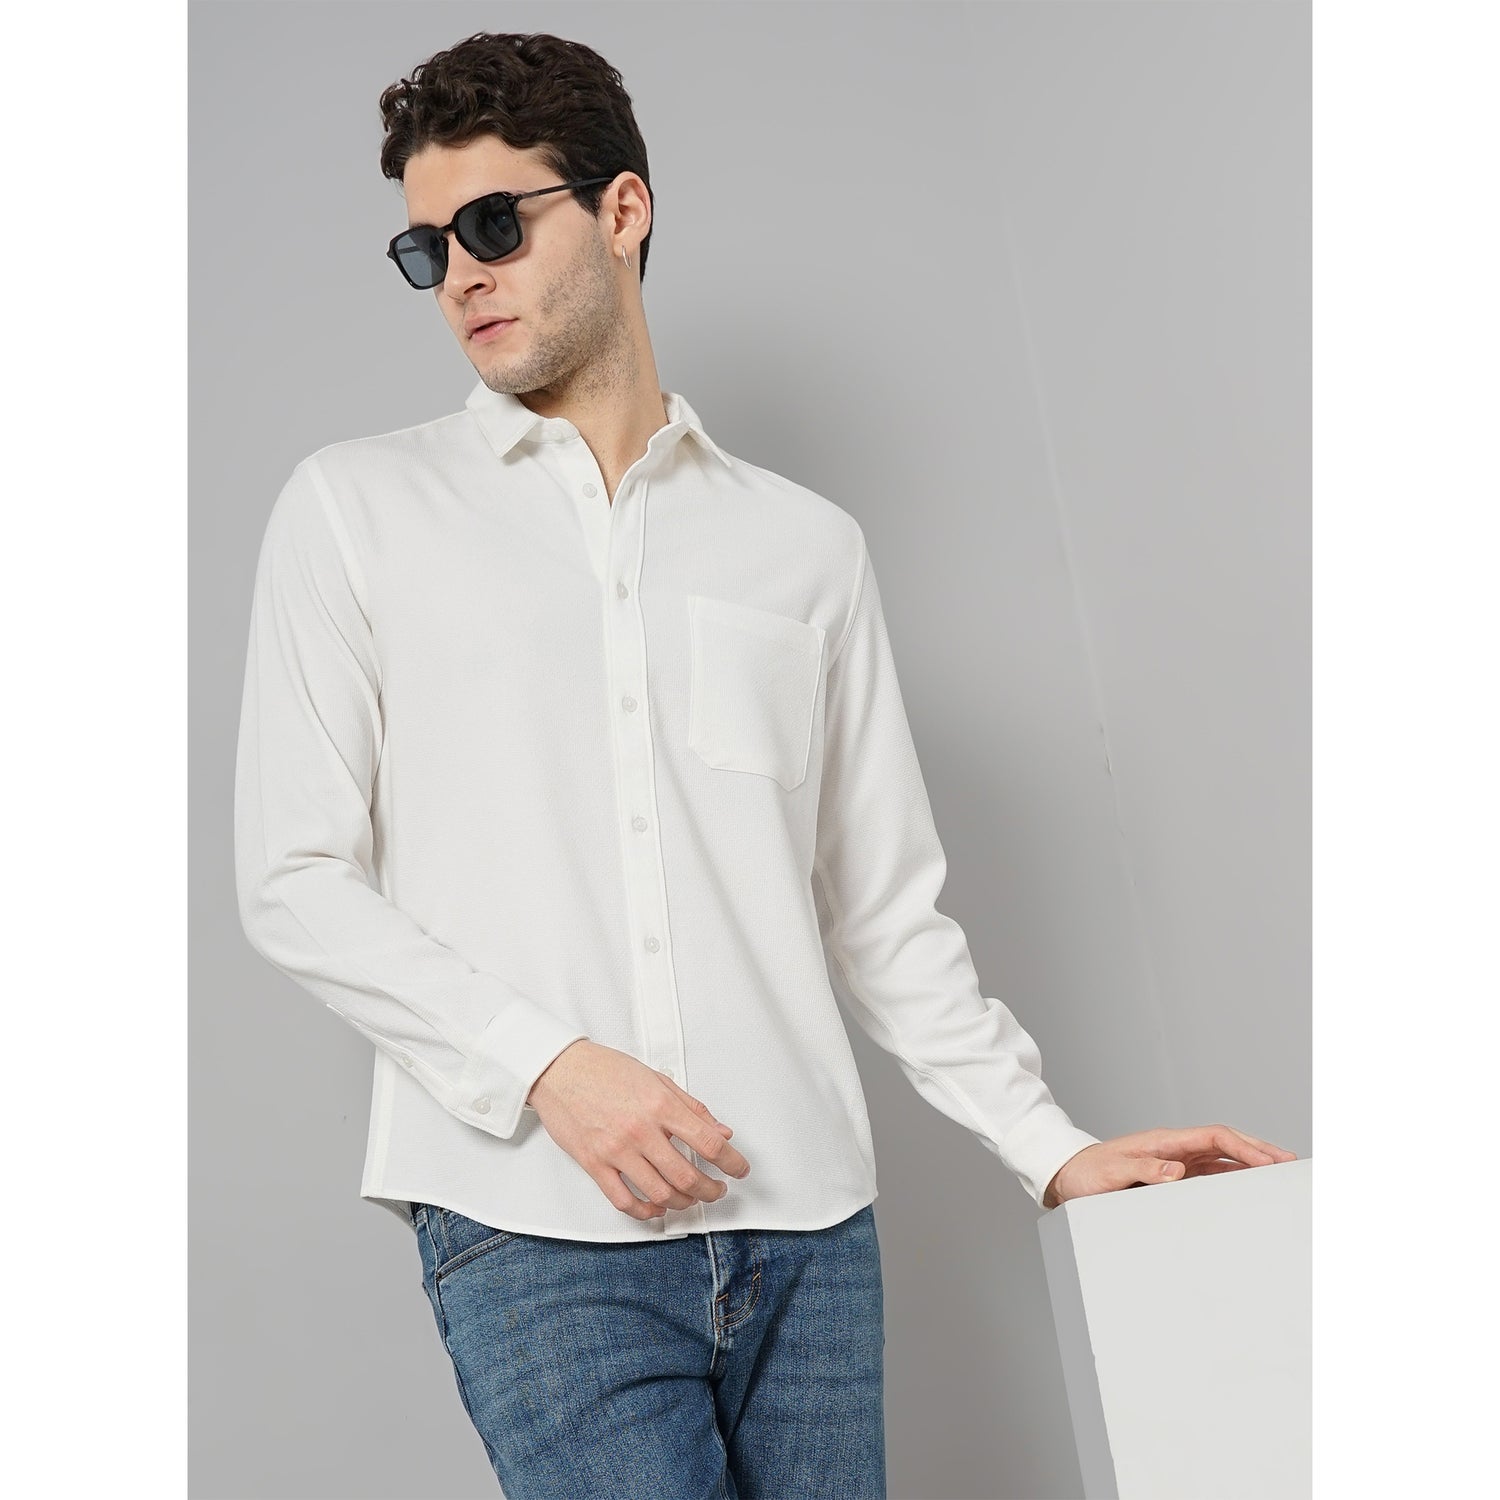 Men Off White Solid Regular Fit Polyester Overshirt Casual Shirt (GAROND)